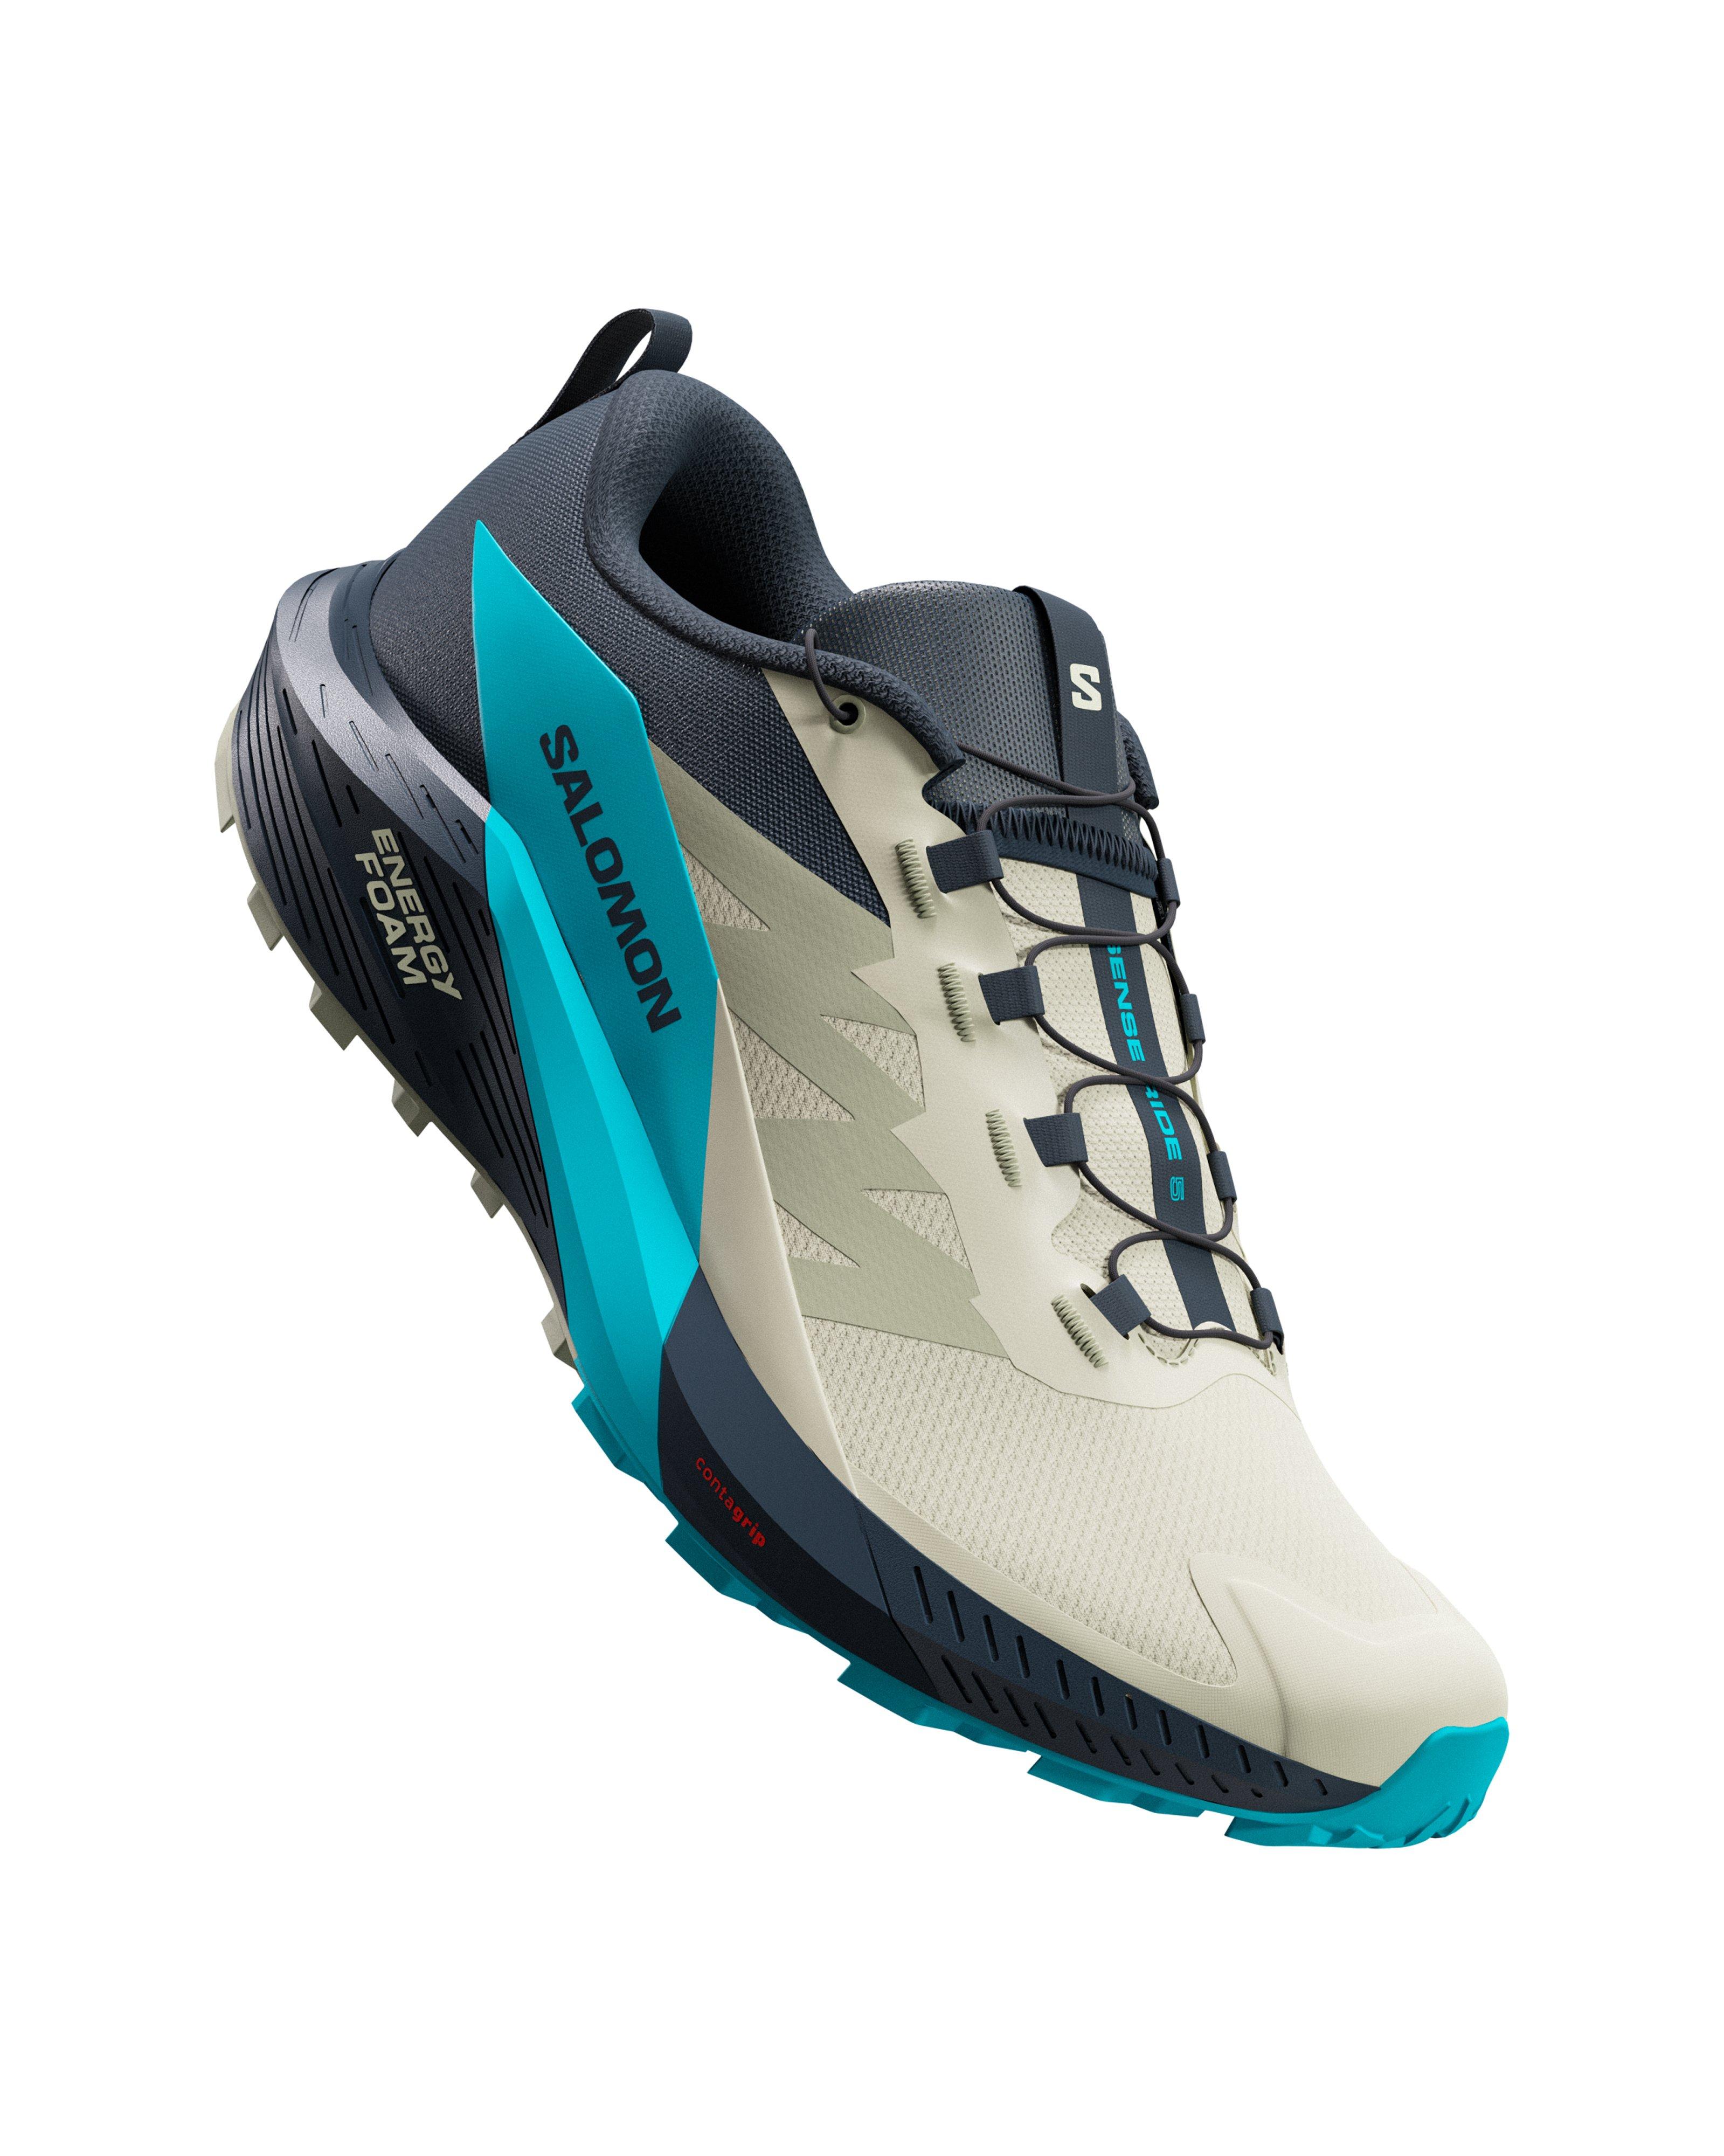 Salomon Men's Sense Ride 5 Trail Running Shoes -  Grey